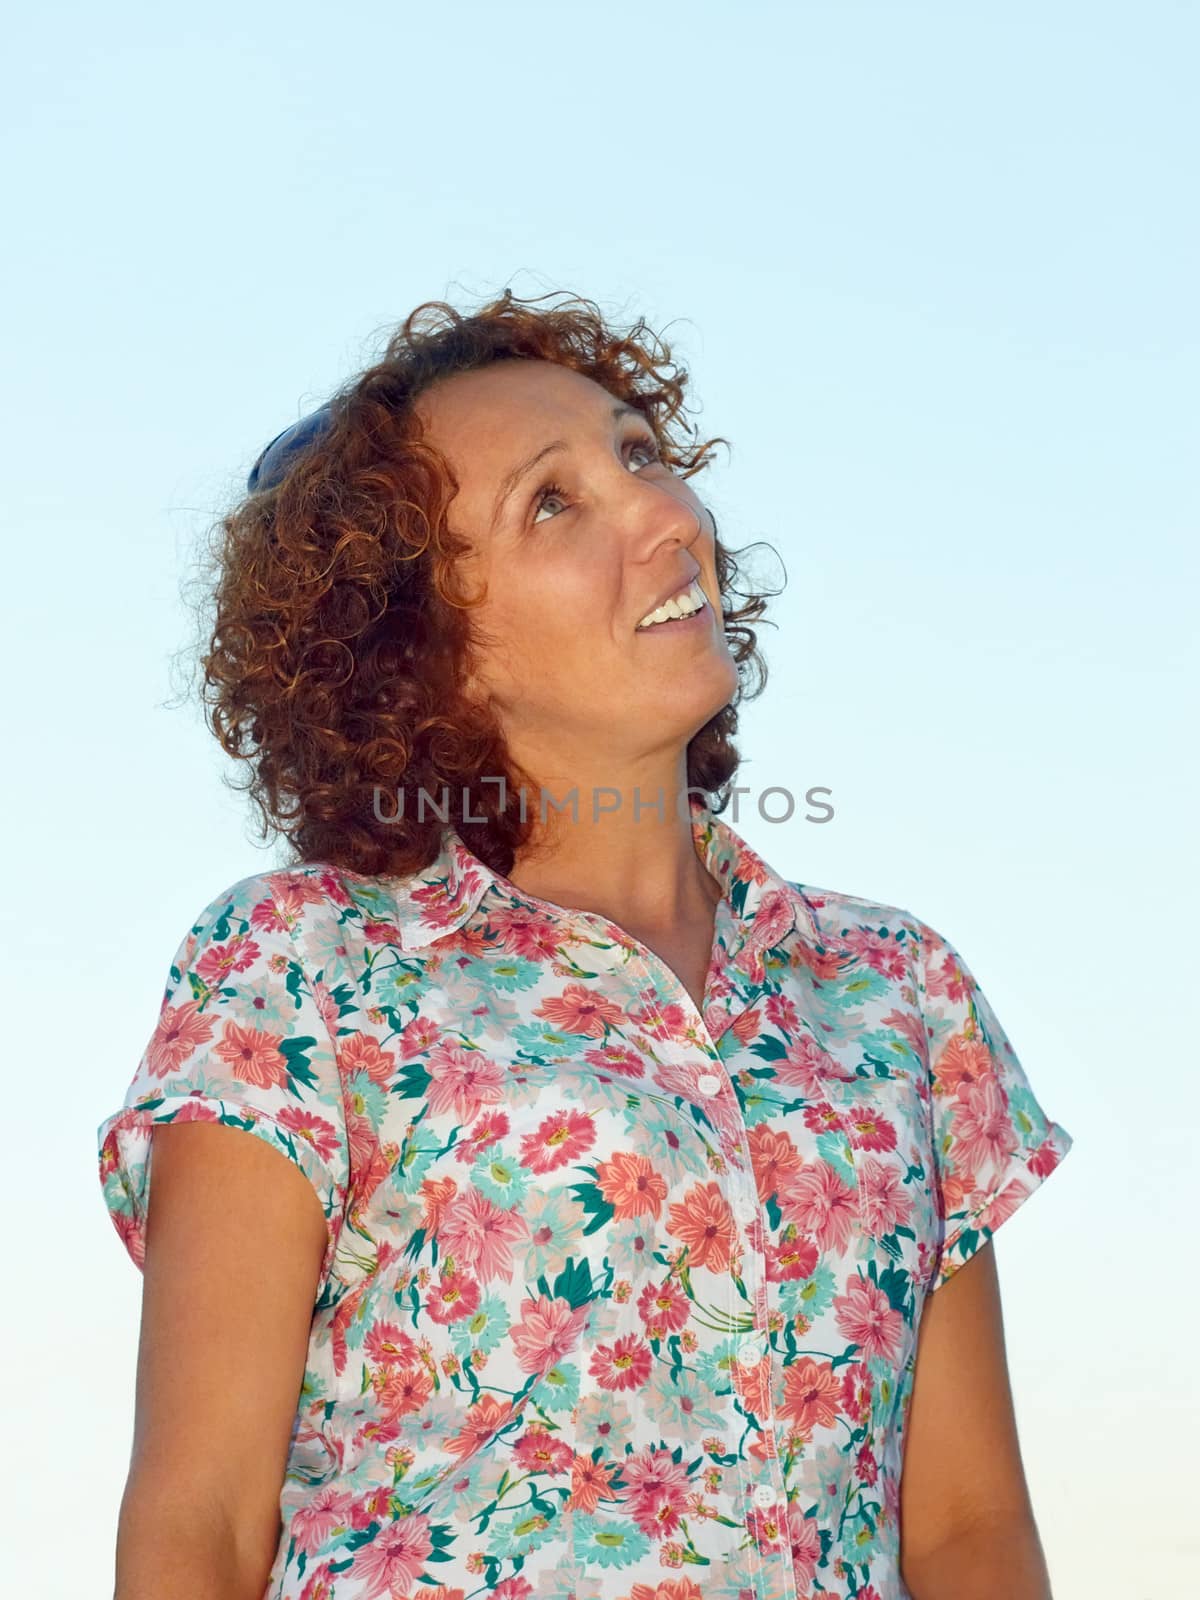 Joyful woman against blue sky by qiiip